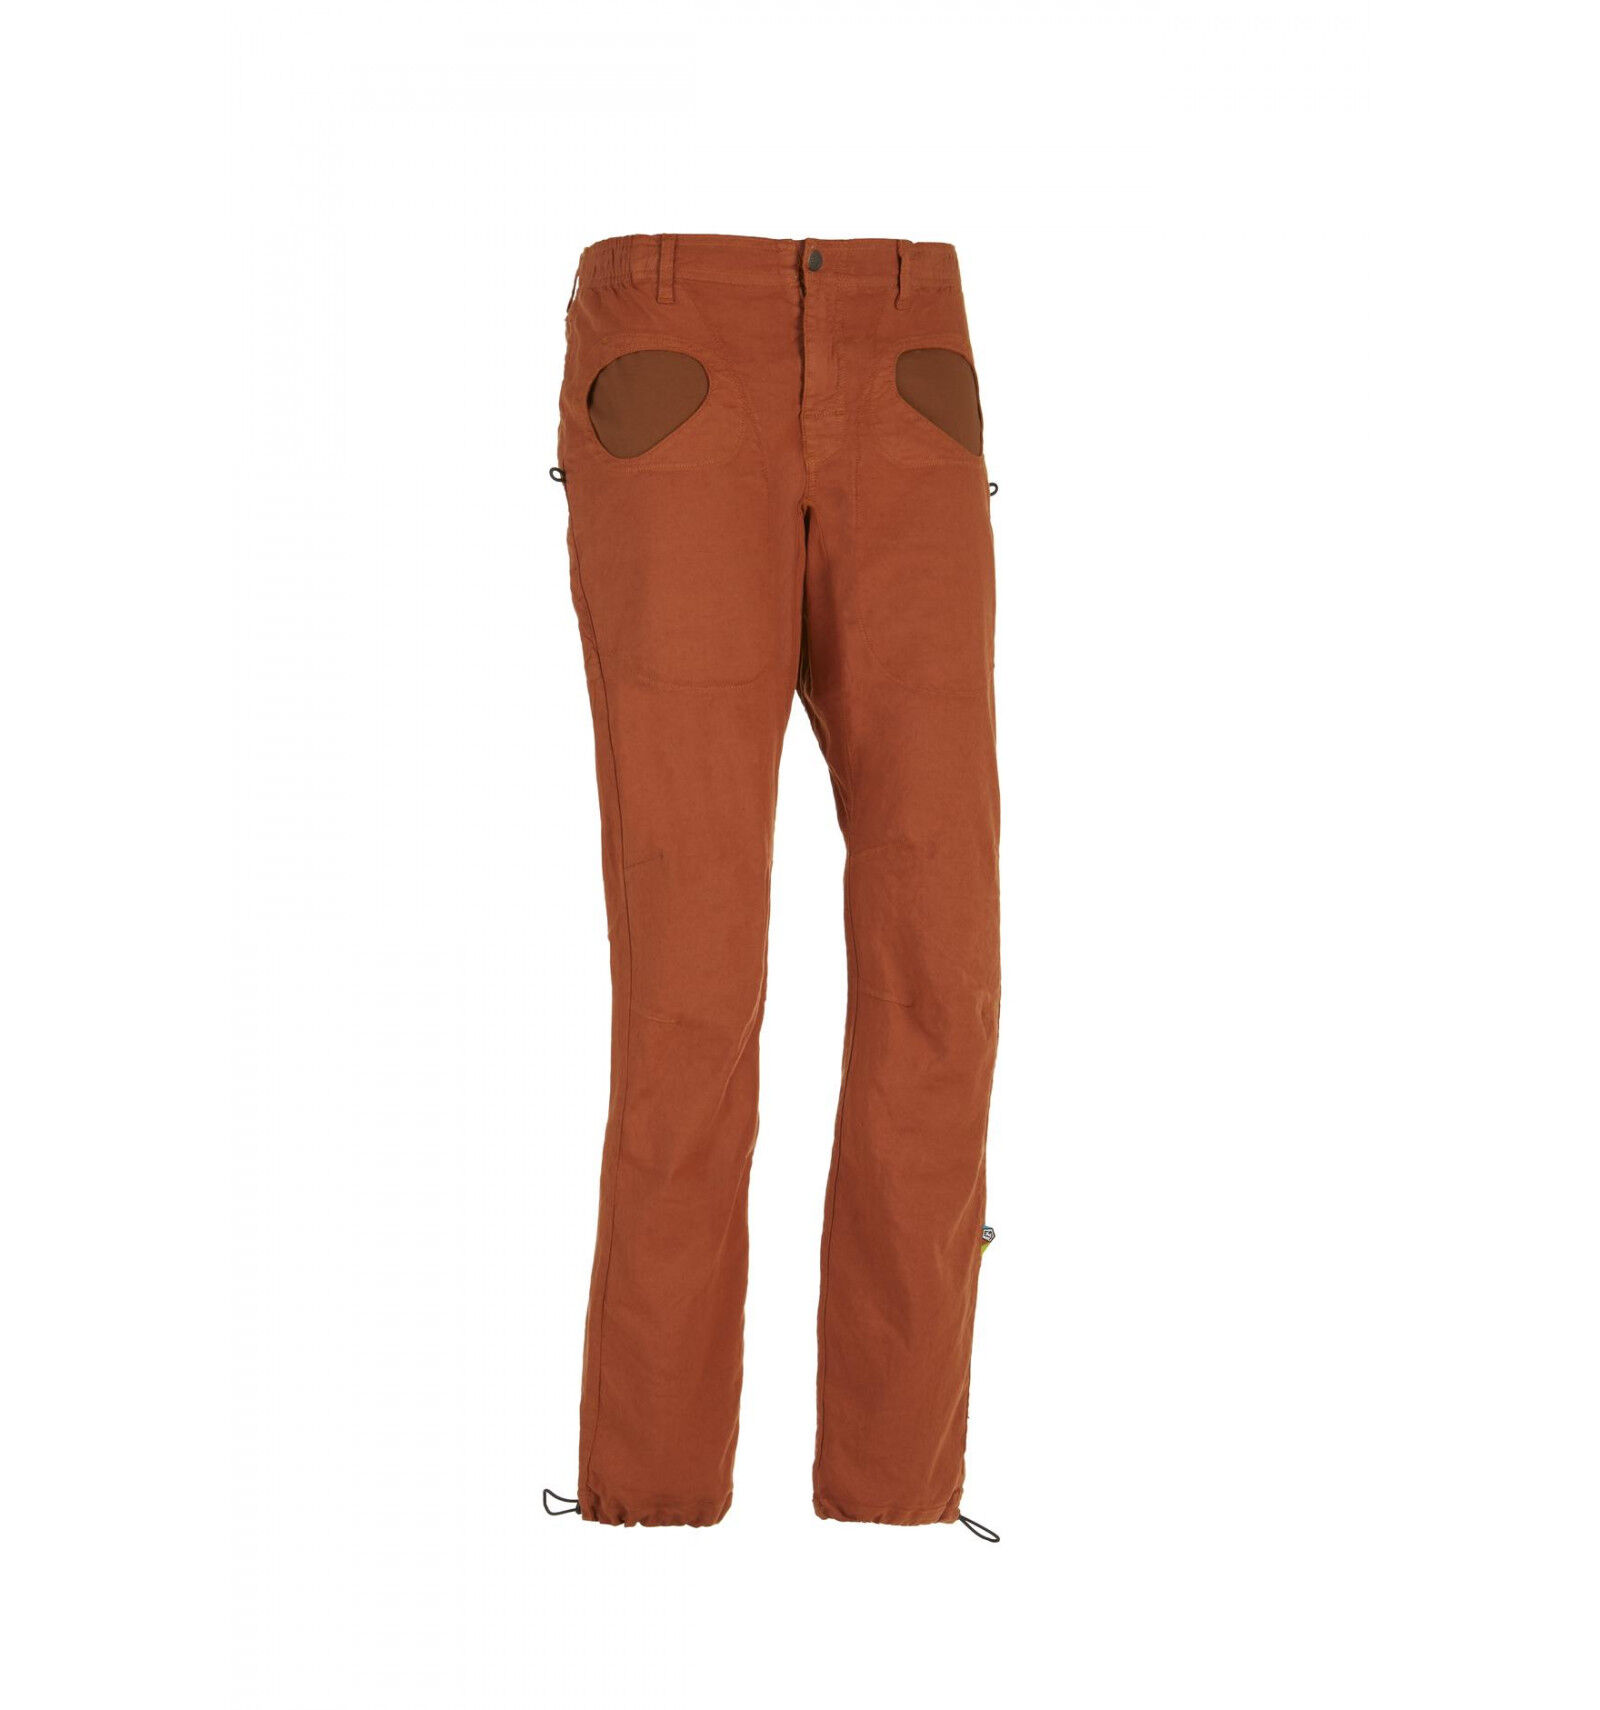 E9 Rondo Flax - Climbing pants - Men's